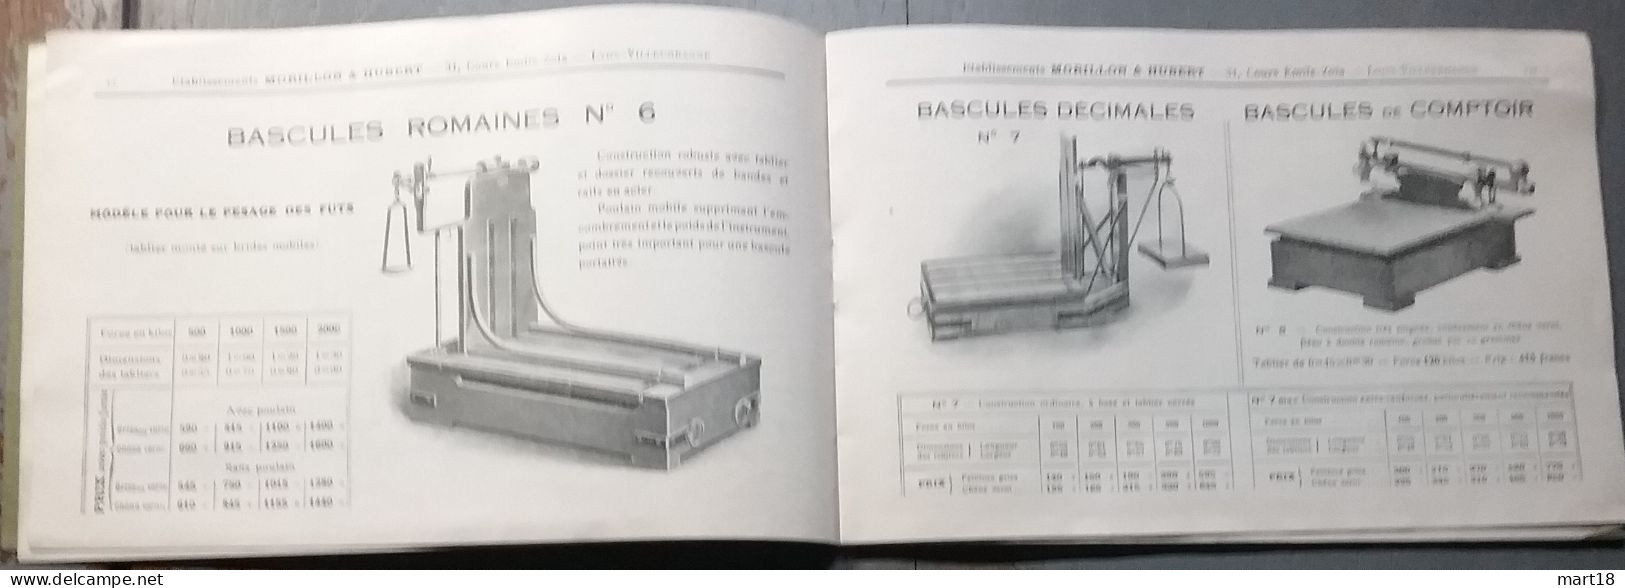 Catalogue 1925 MORILLON & HUBERT Instruments De Pesage Balance Bascule Crochets - Other Apparatus